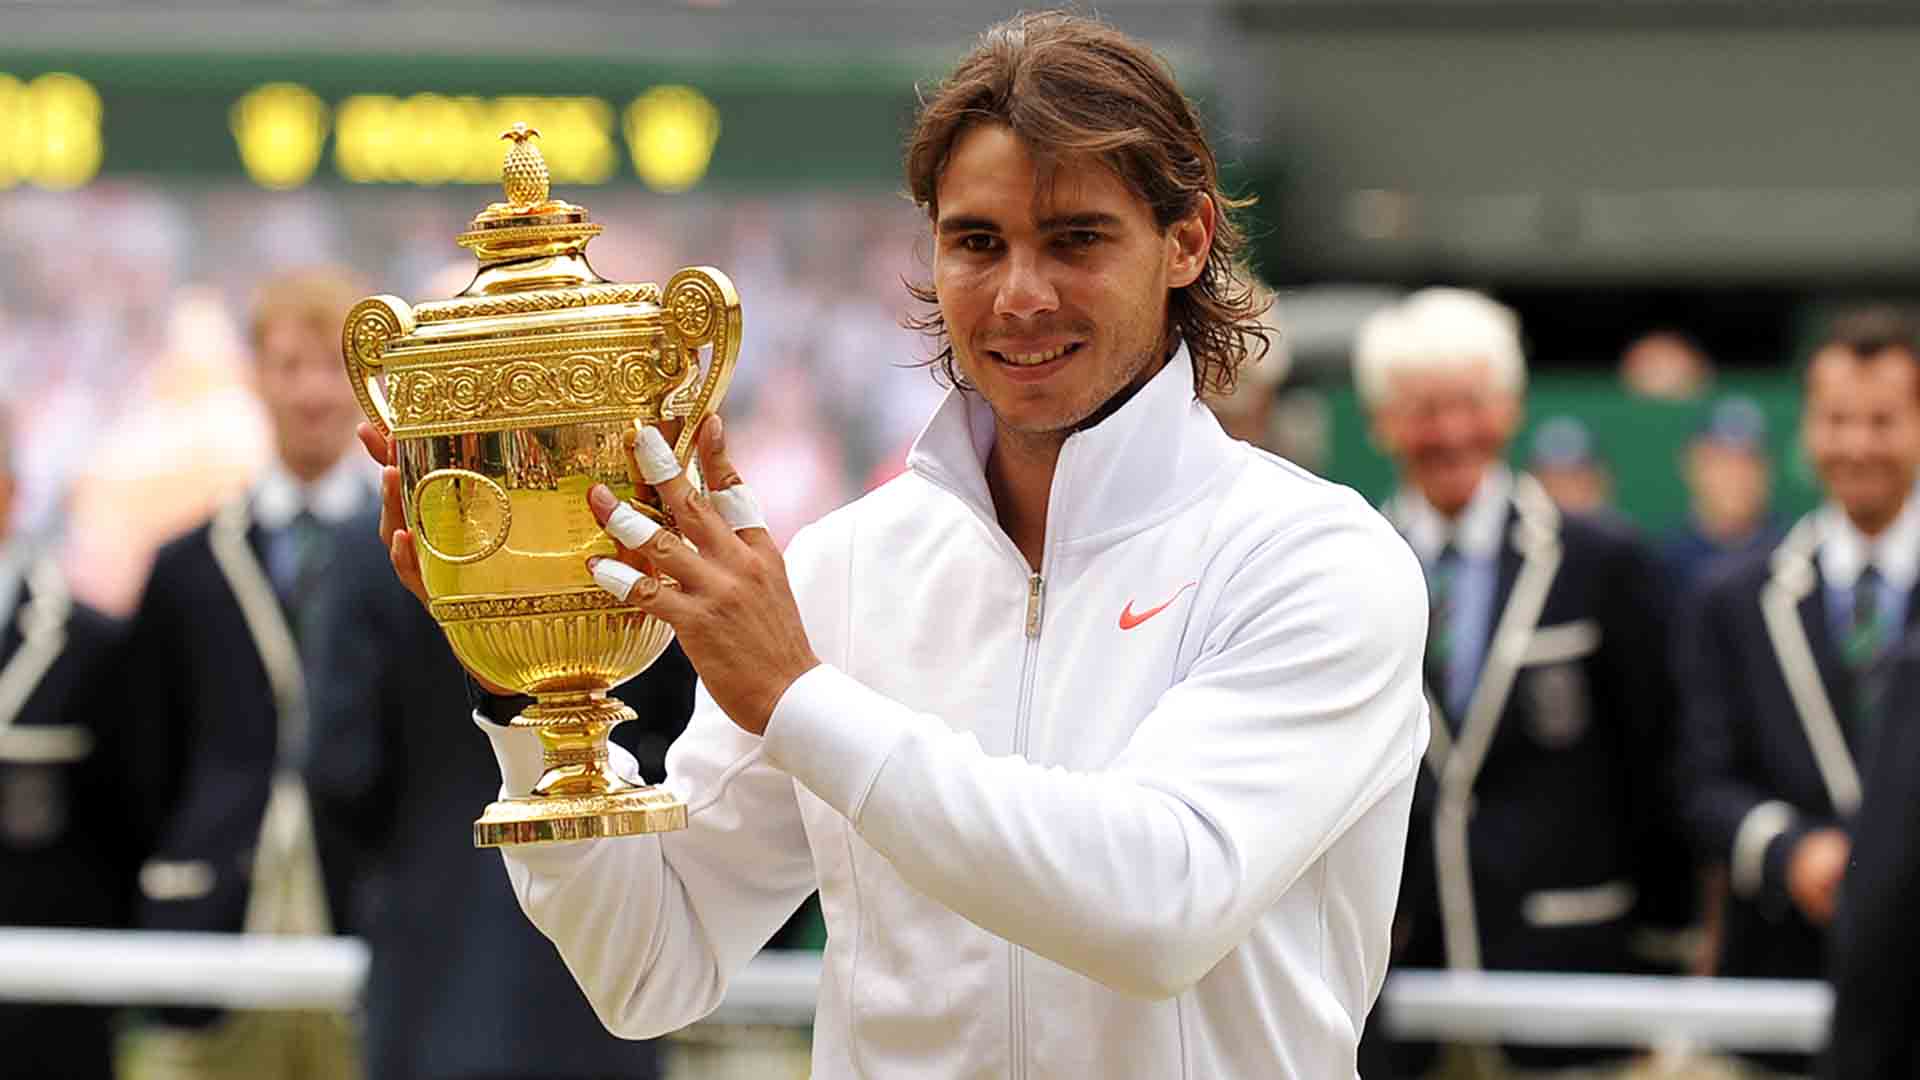 Rafael Nadal beats Tomas Berdych 6-3, 7-5, 6-4 to claim his second Wimbledon trophy.